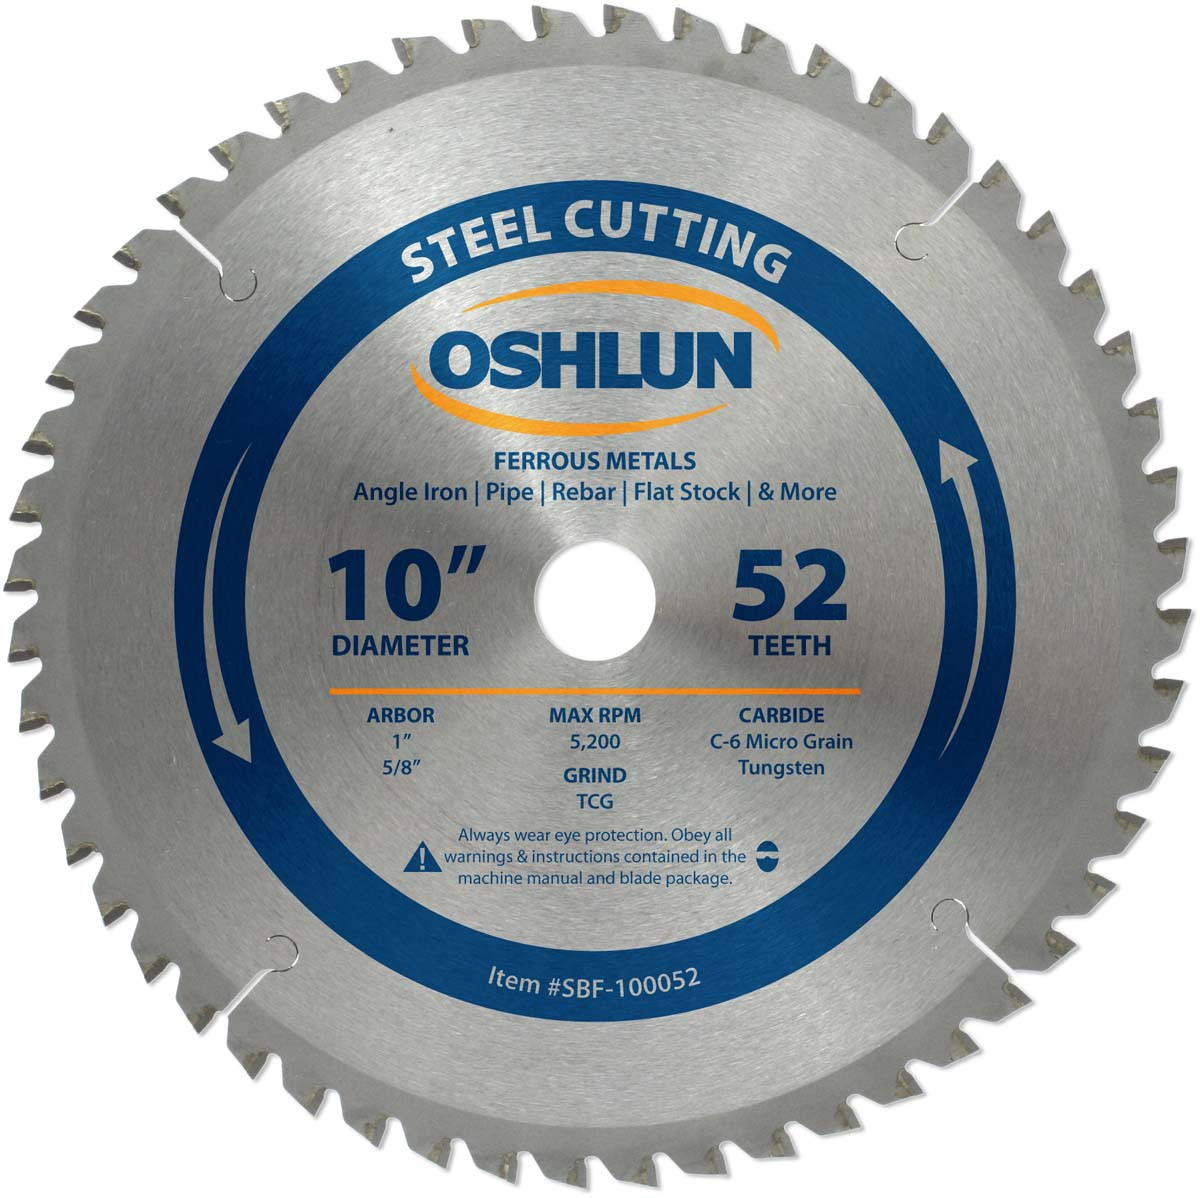 steel cutting circular saw blade